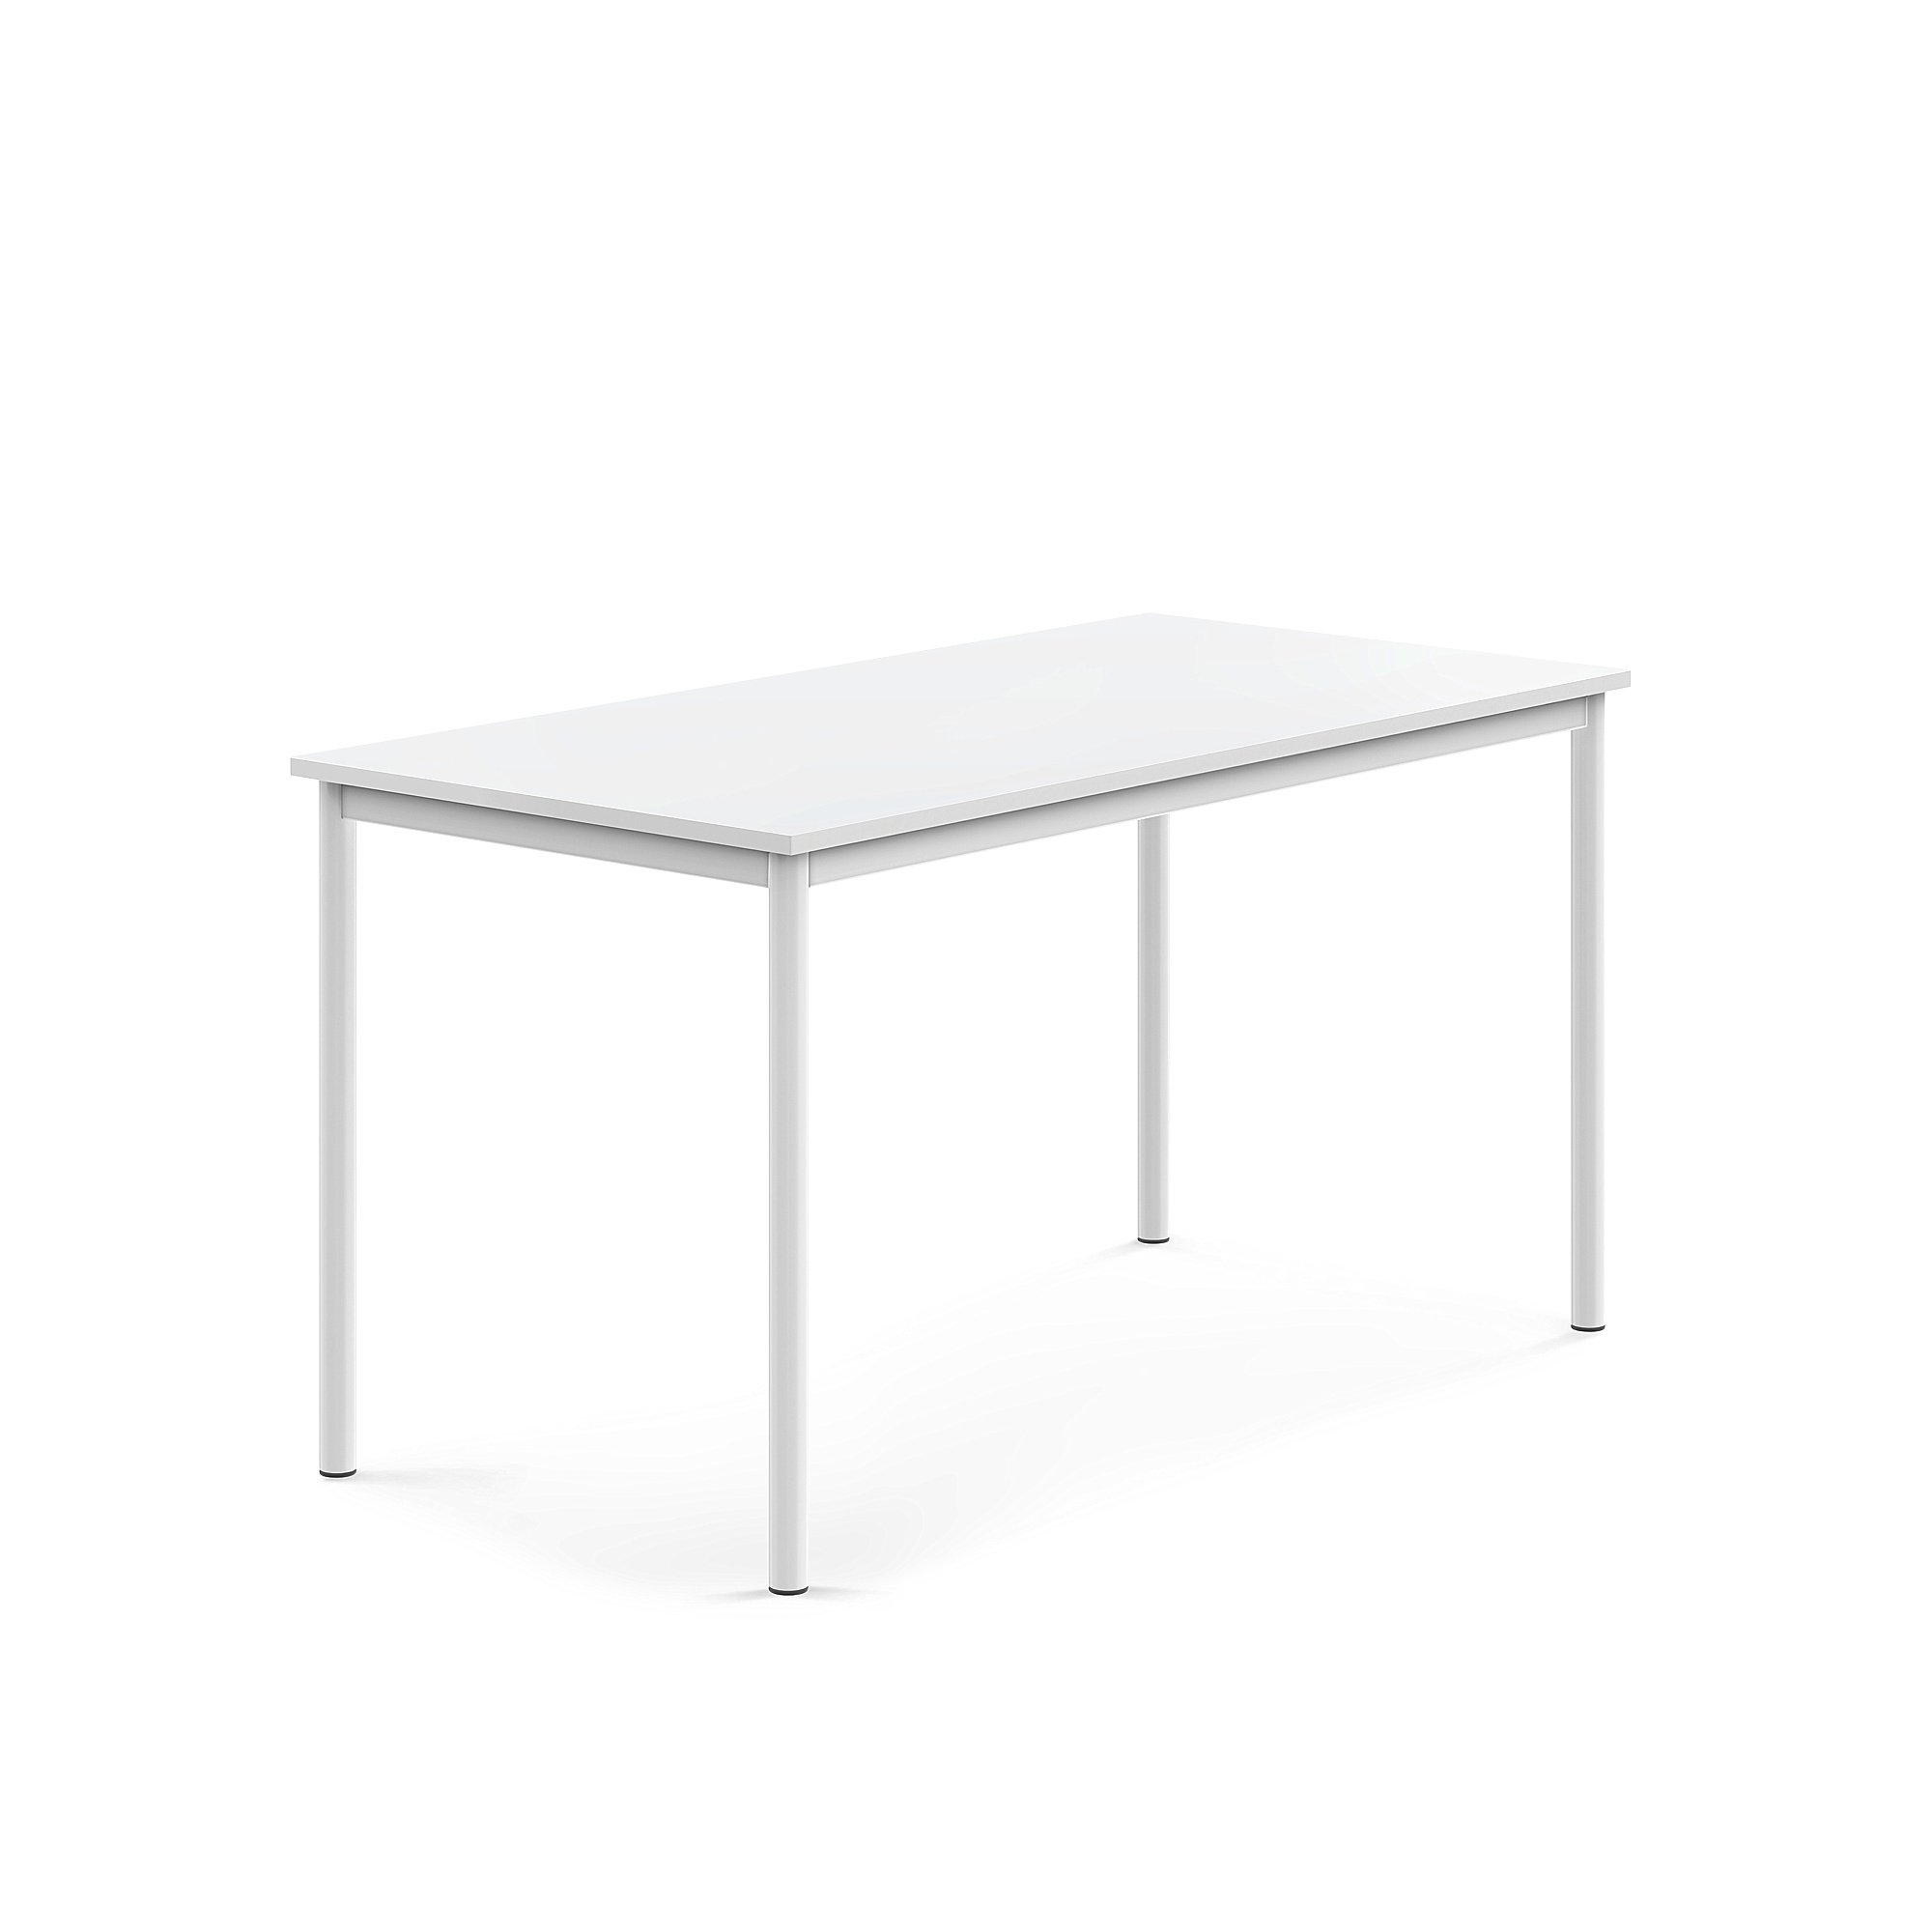 Stůl SONITUS, 1400x700x720 mm, bílé nohy, HPL deska tlumící hluk, bílá